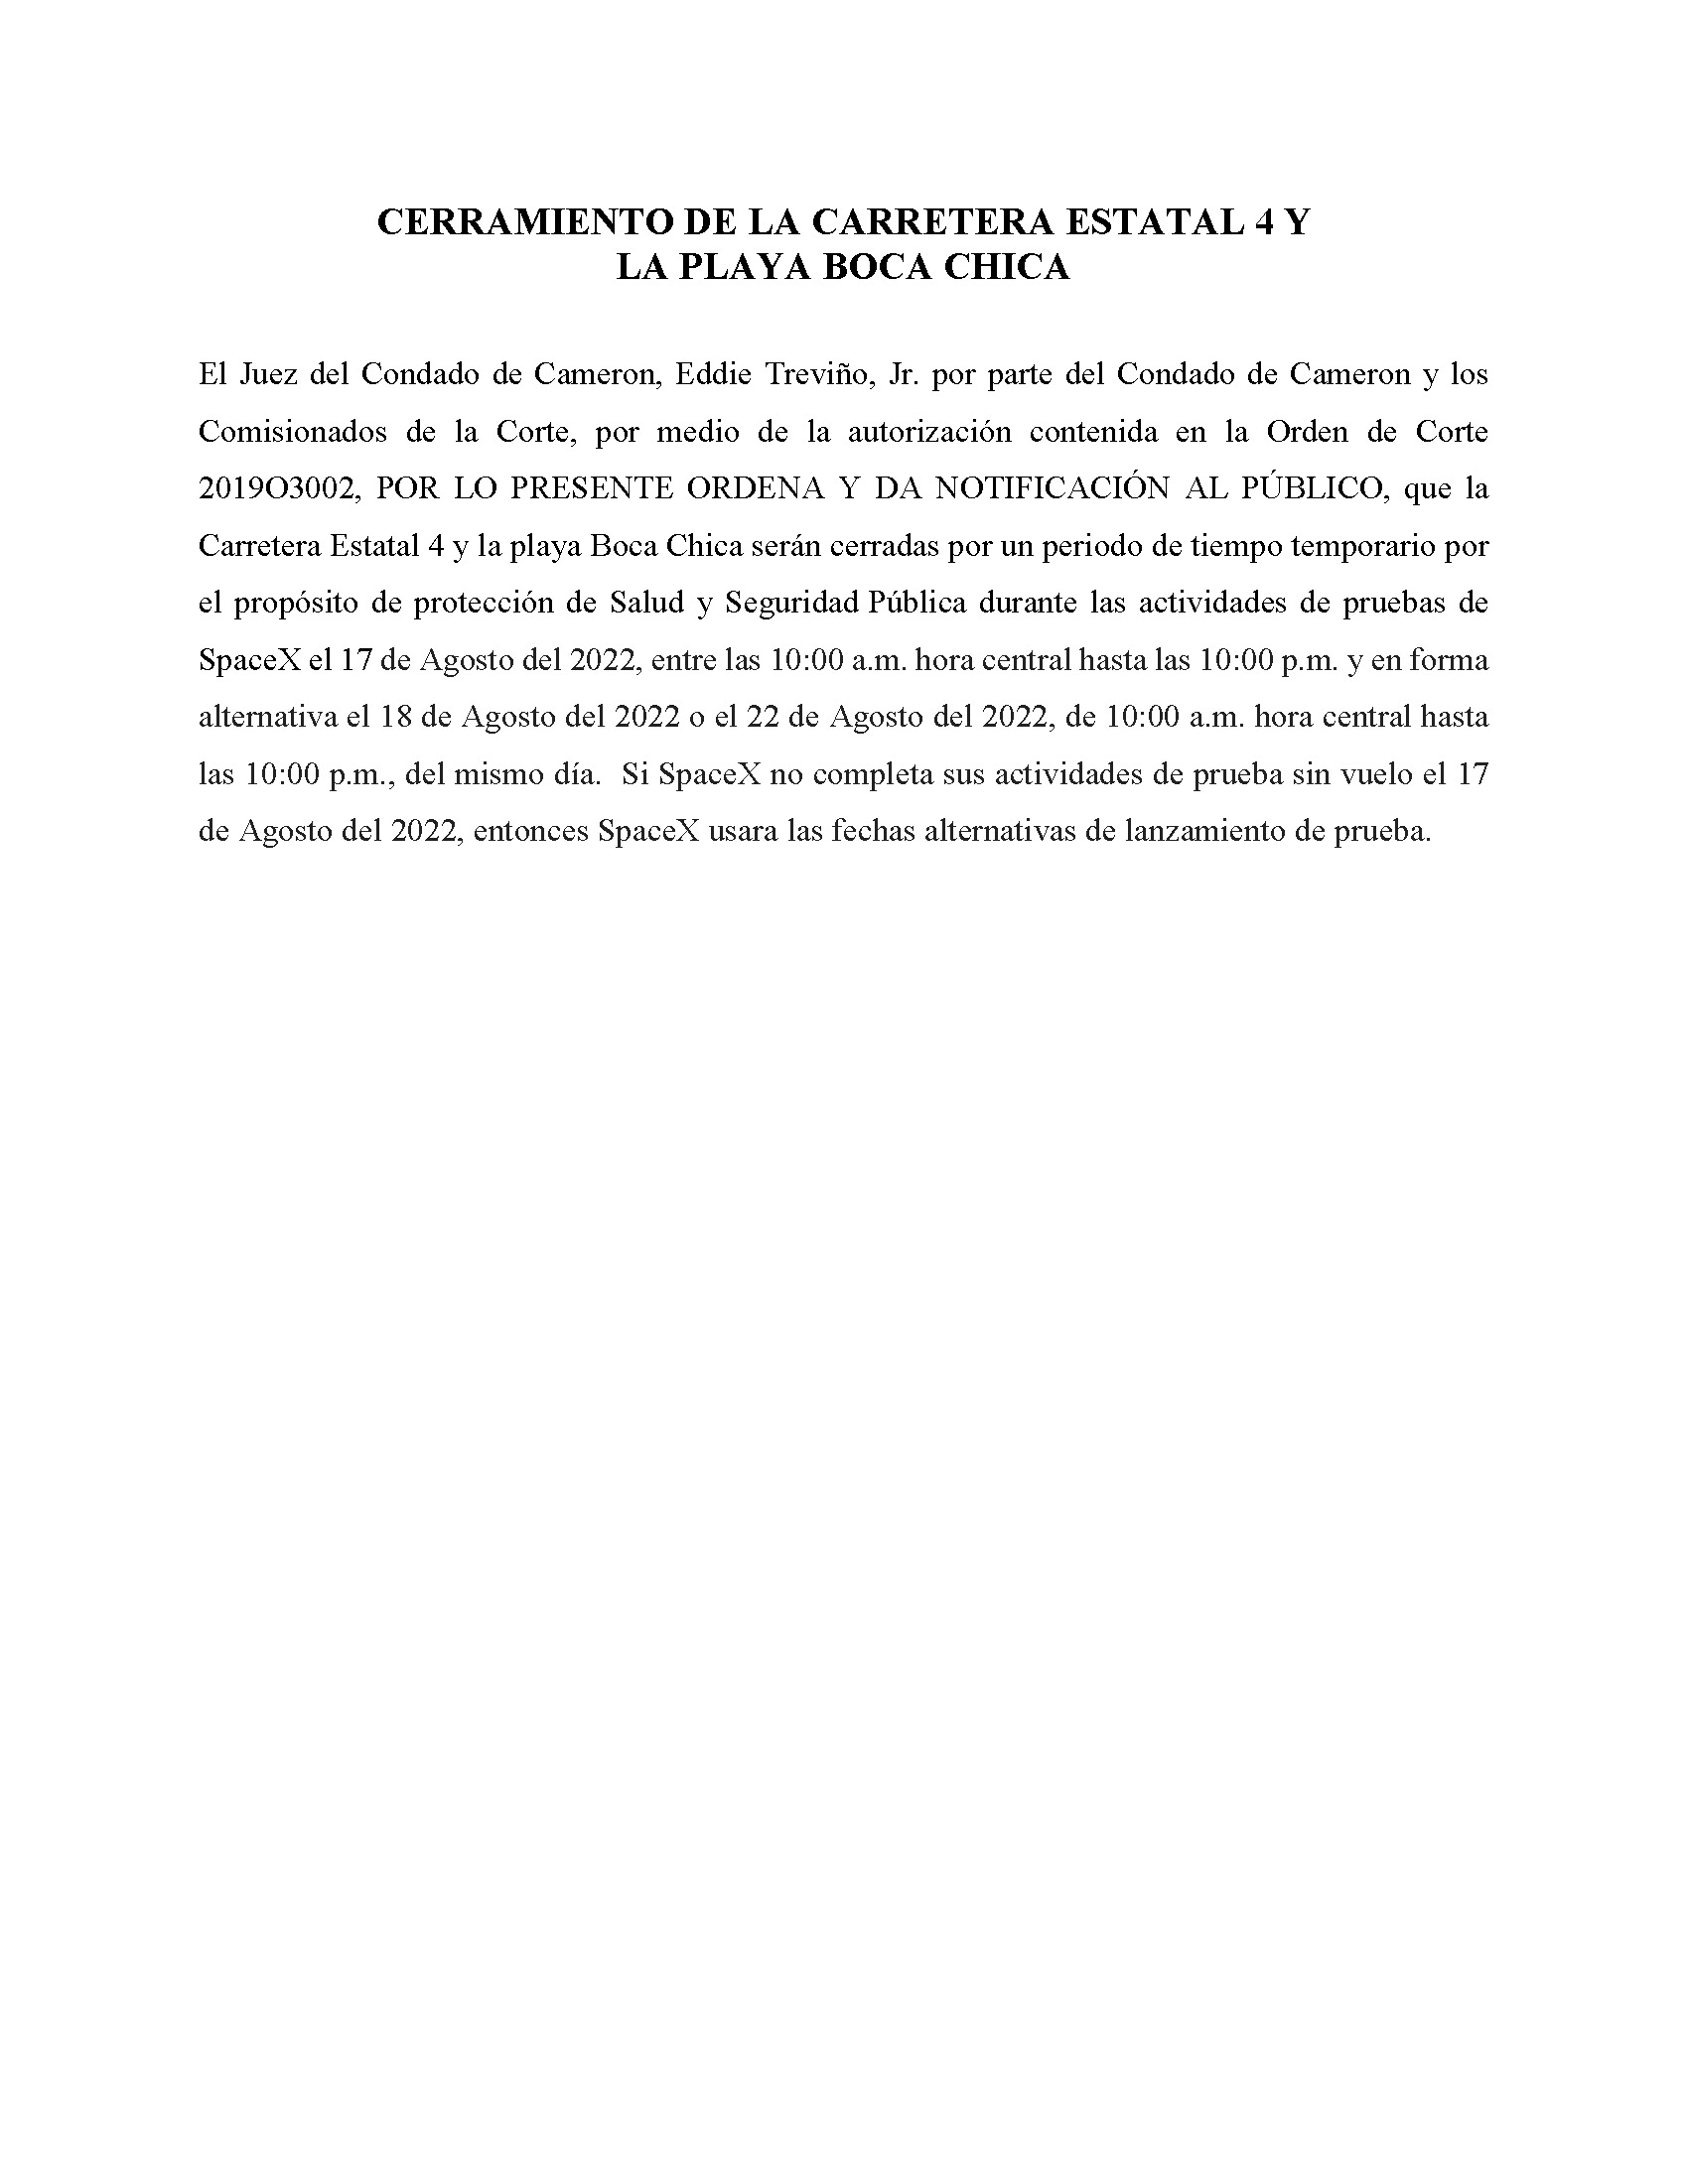 ORDER.CLOSURE OF HIGHWAY 4 Y LA PLAYA BOCA CHICA.SPANISH.08.17.2022